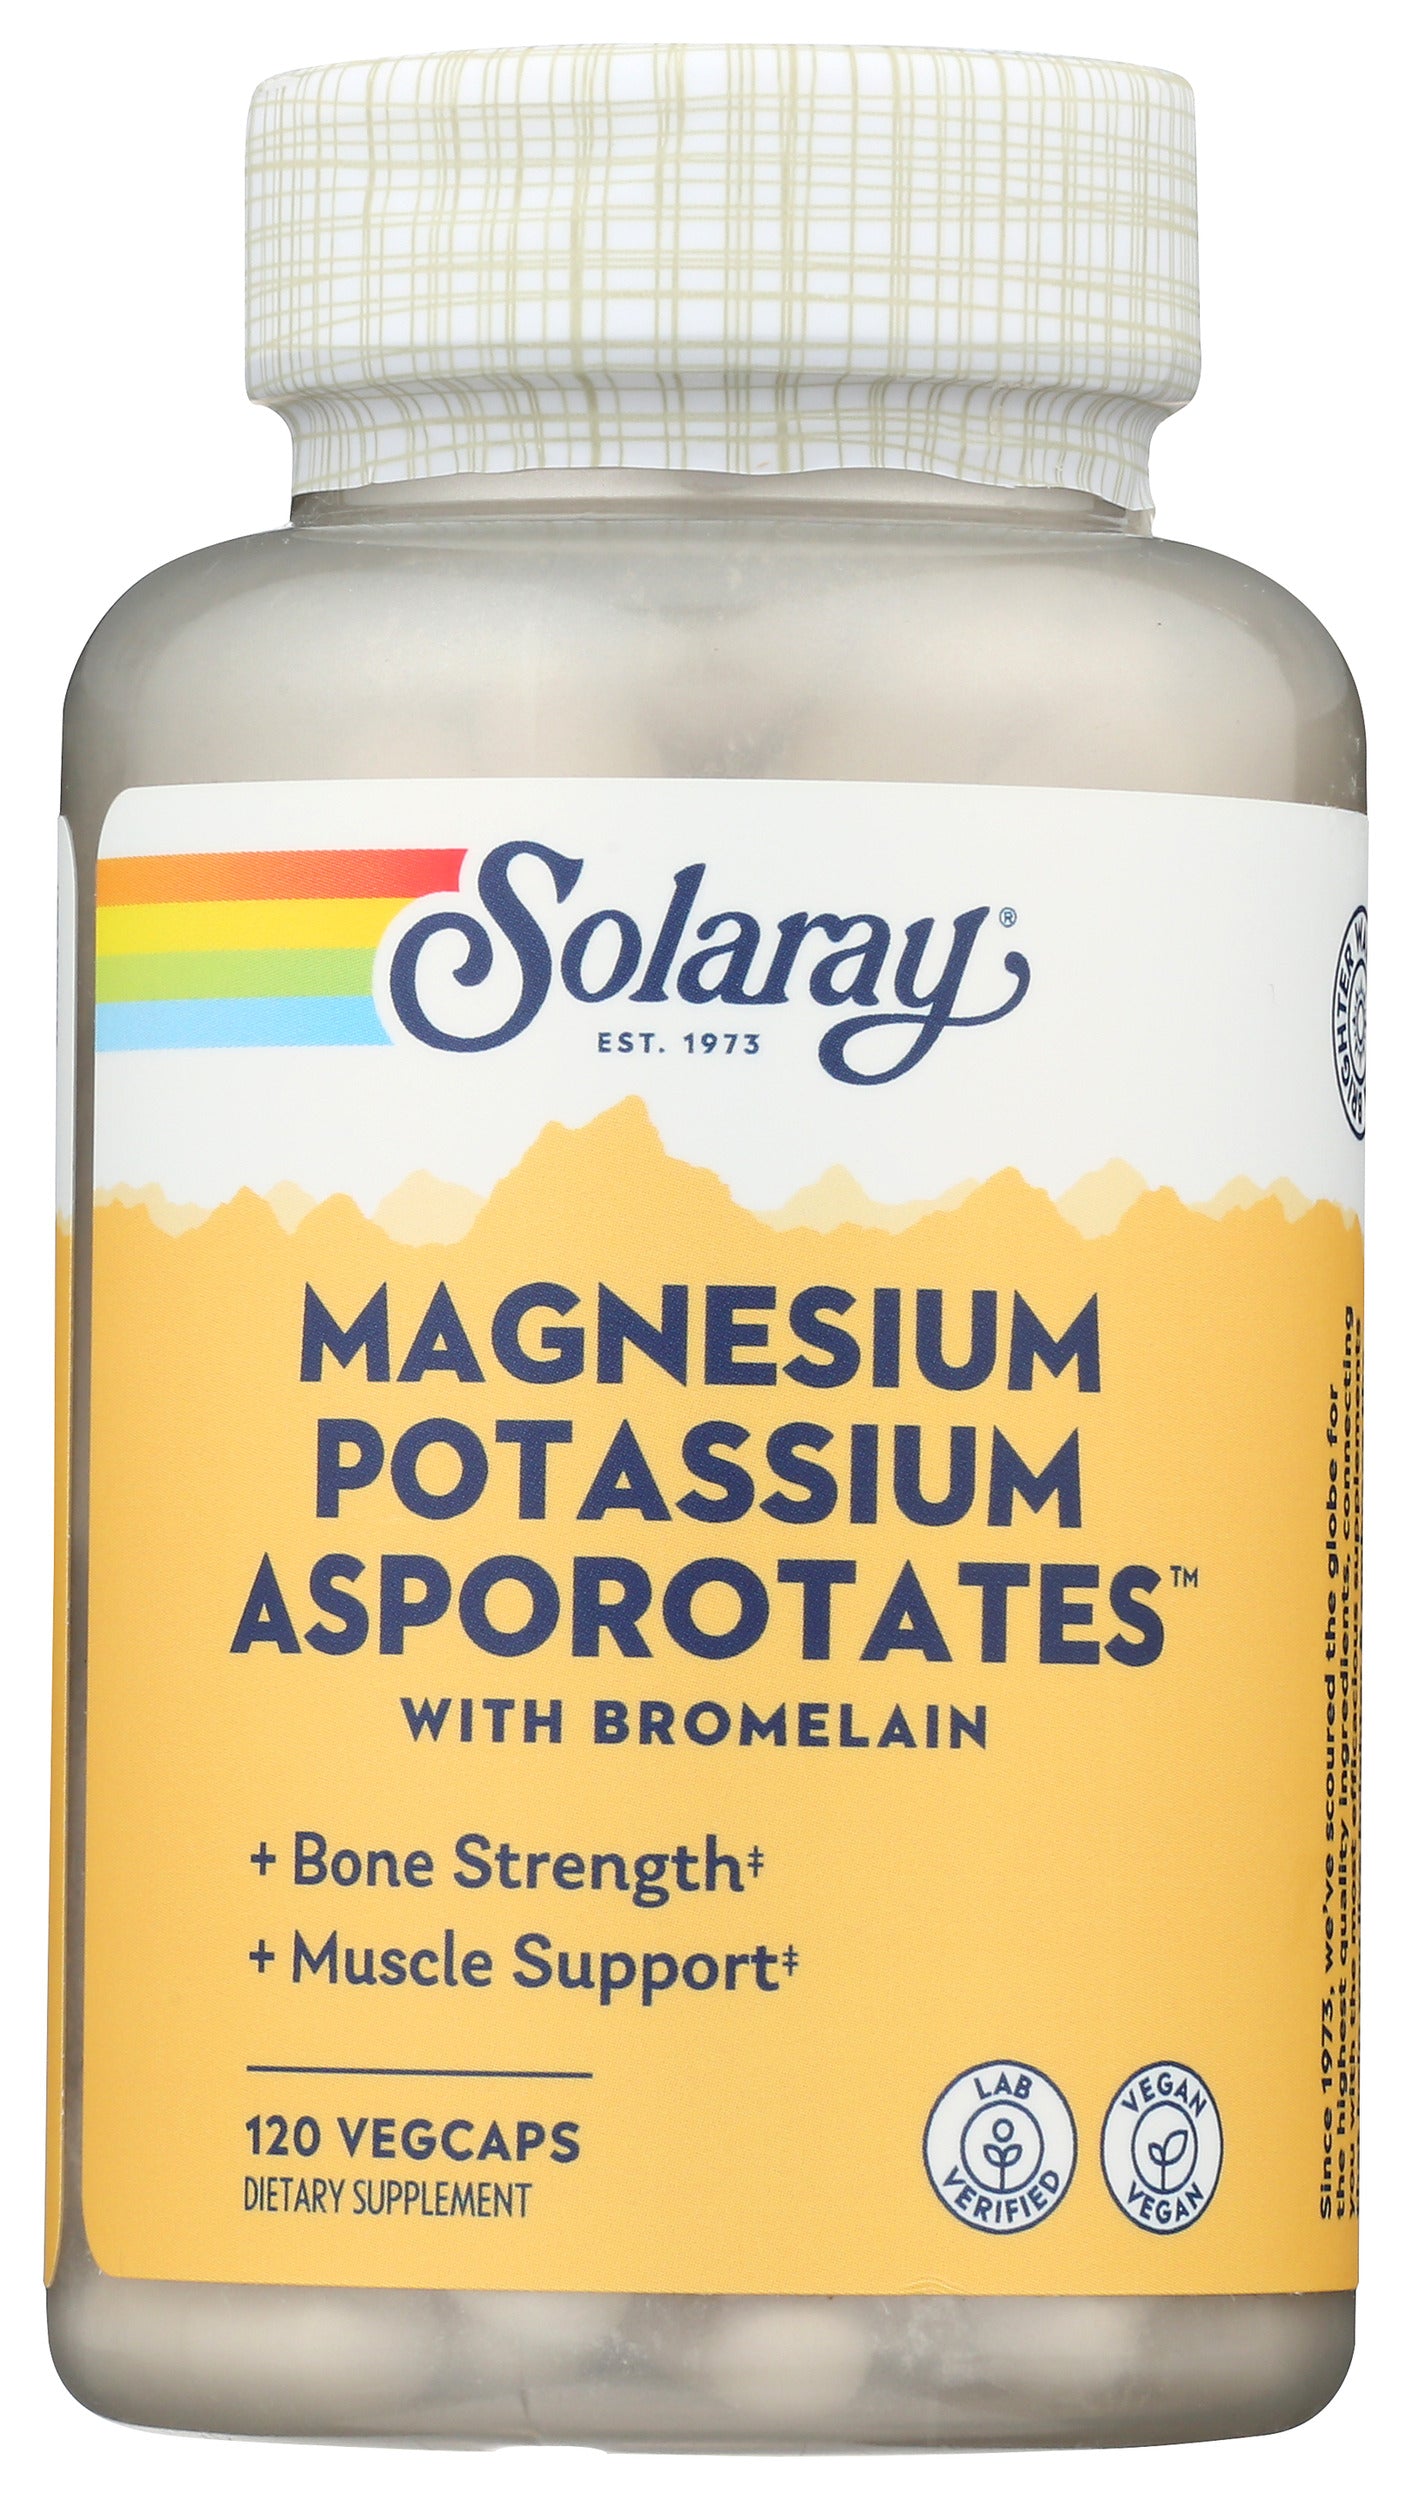 Solaray Magnesium Potassium Asporotates with Bromelain 120 VegCaps Front of Bottle